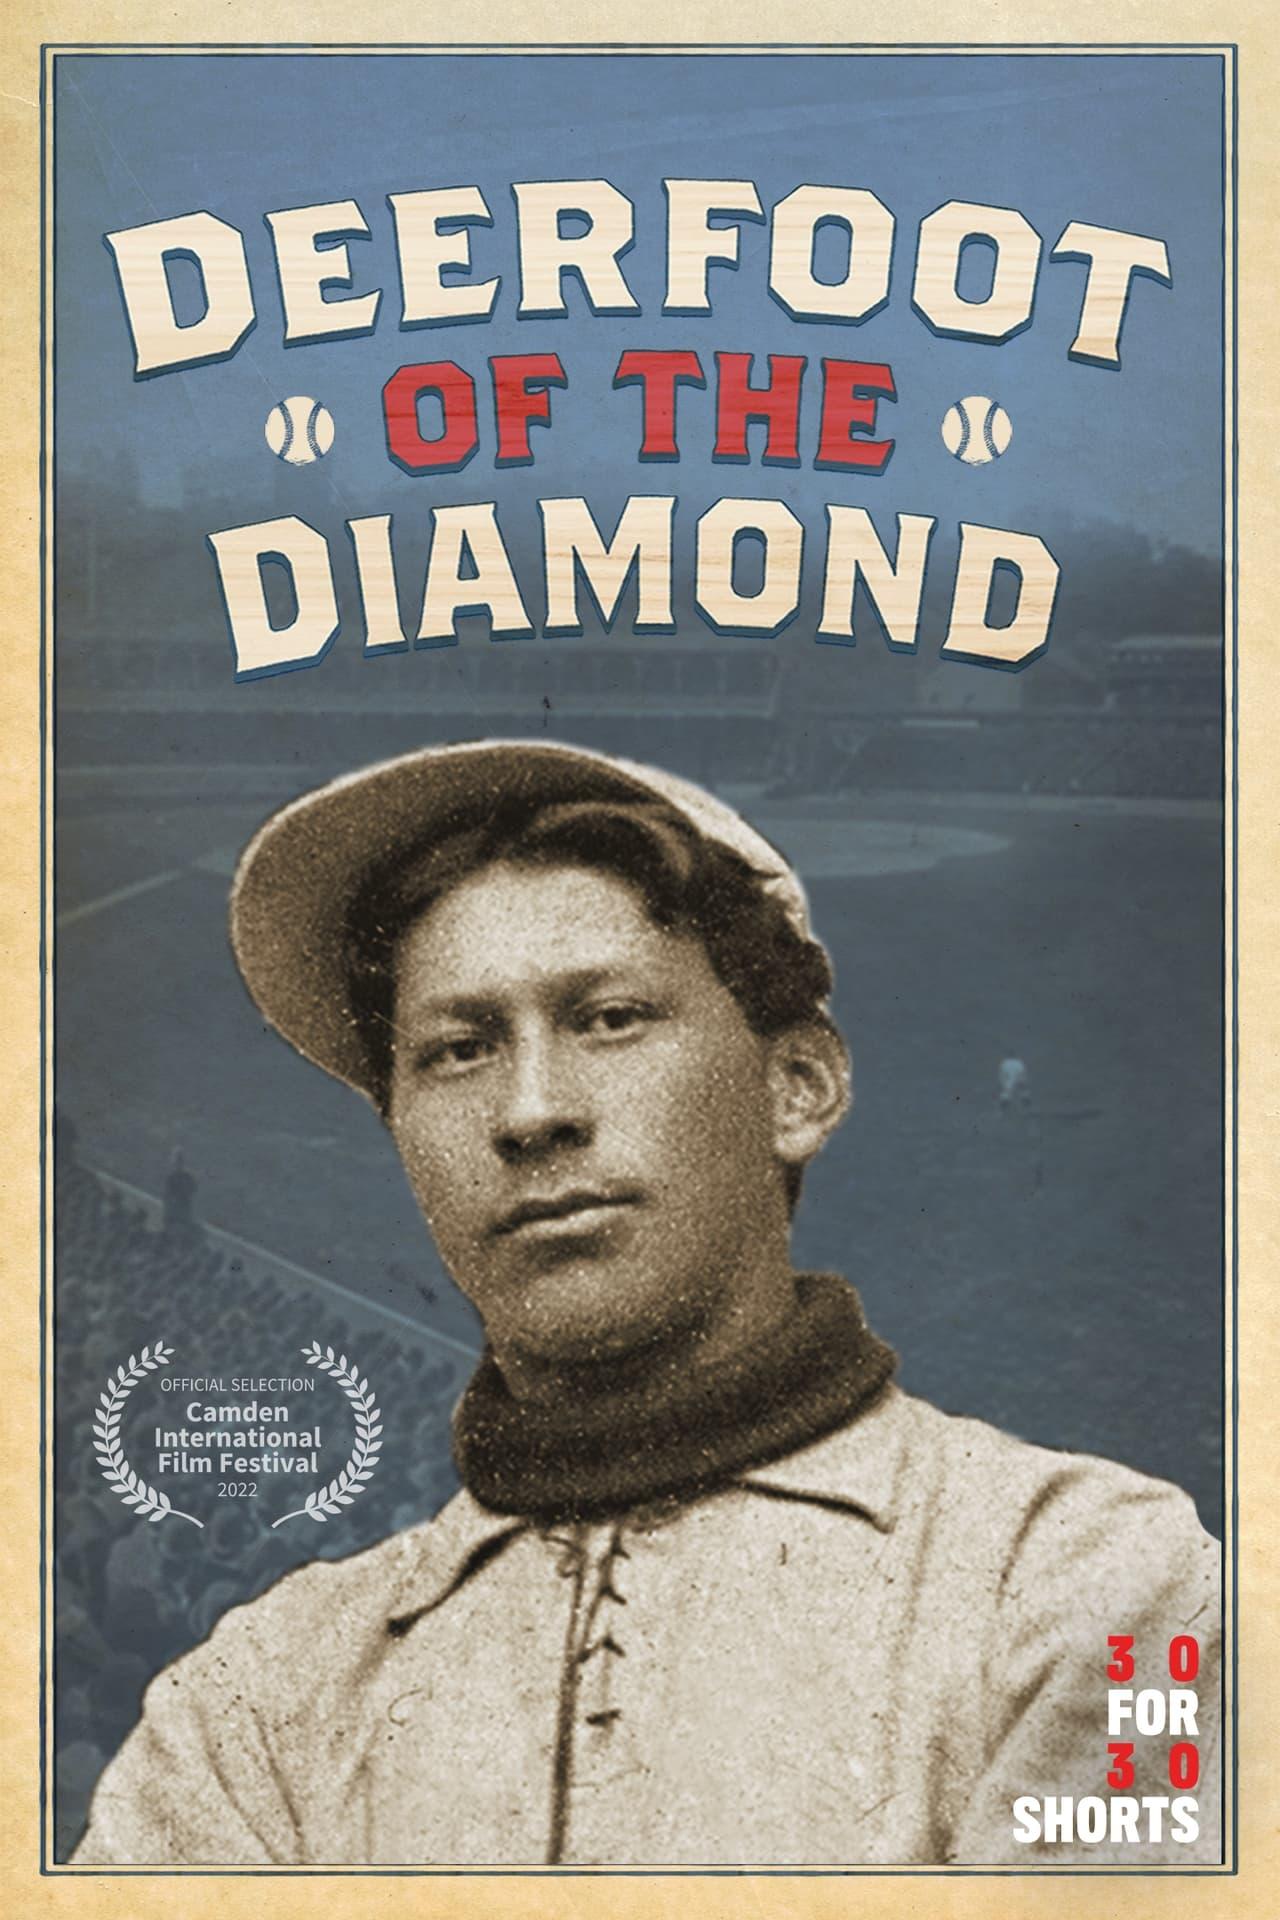 Deerfoot of the Diamond poster